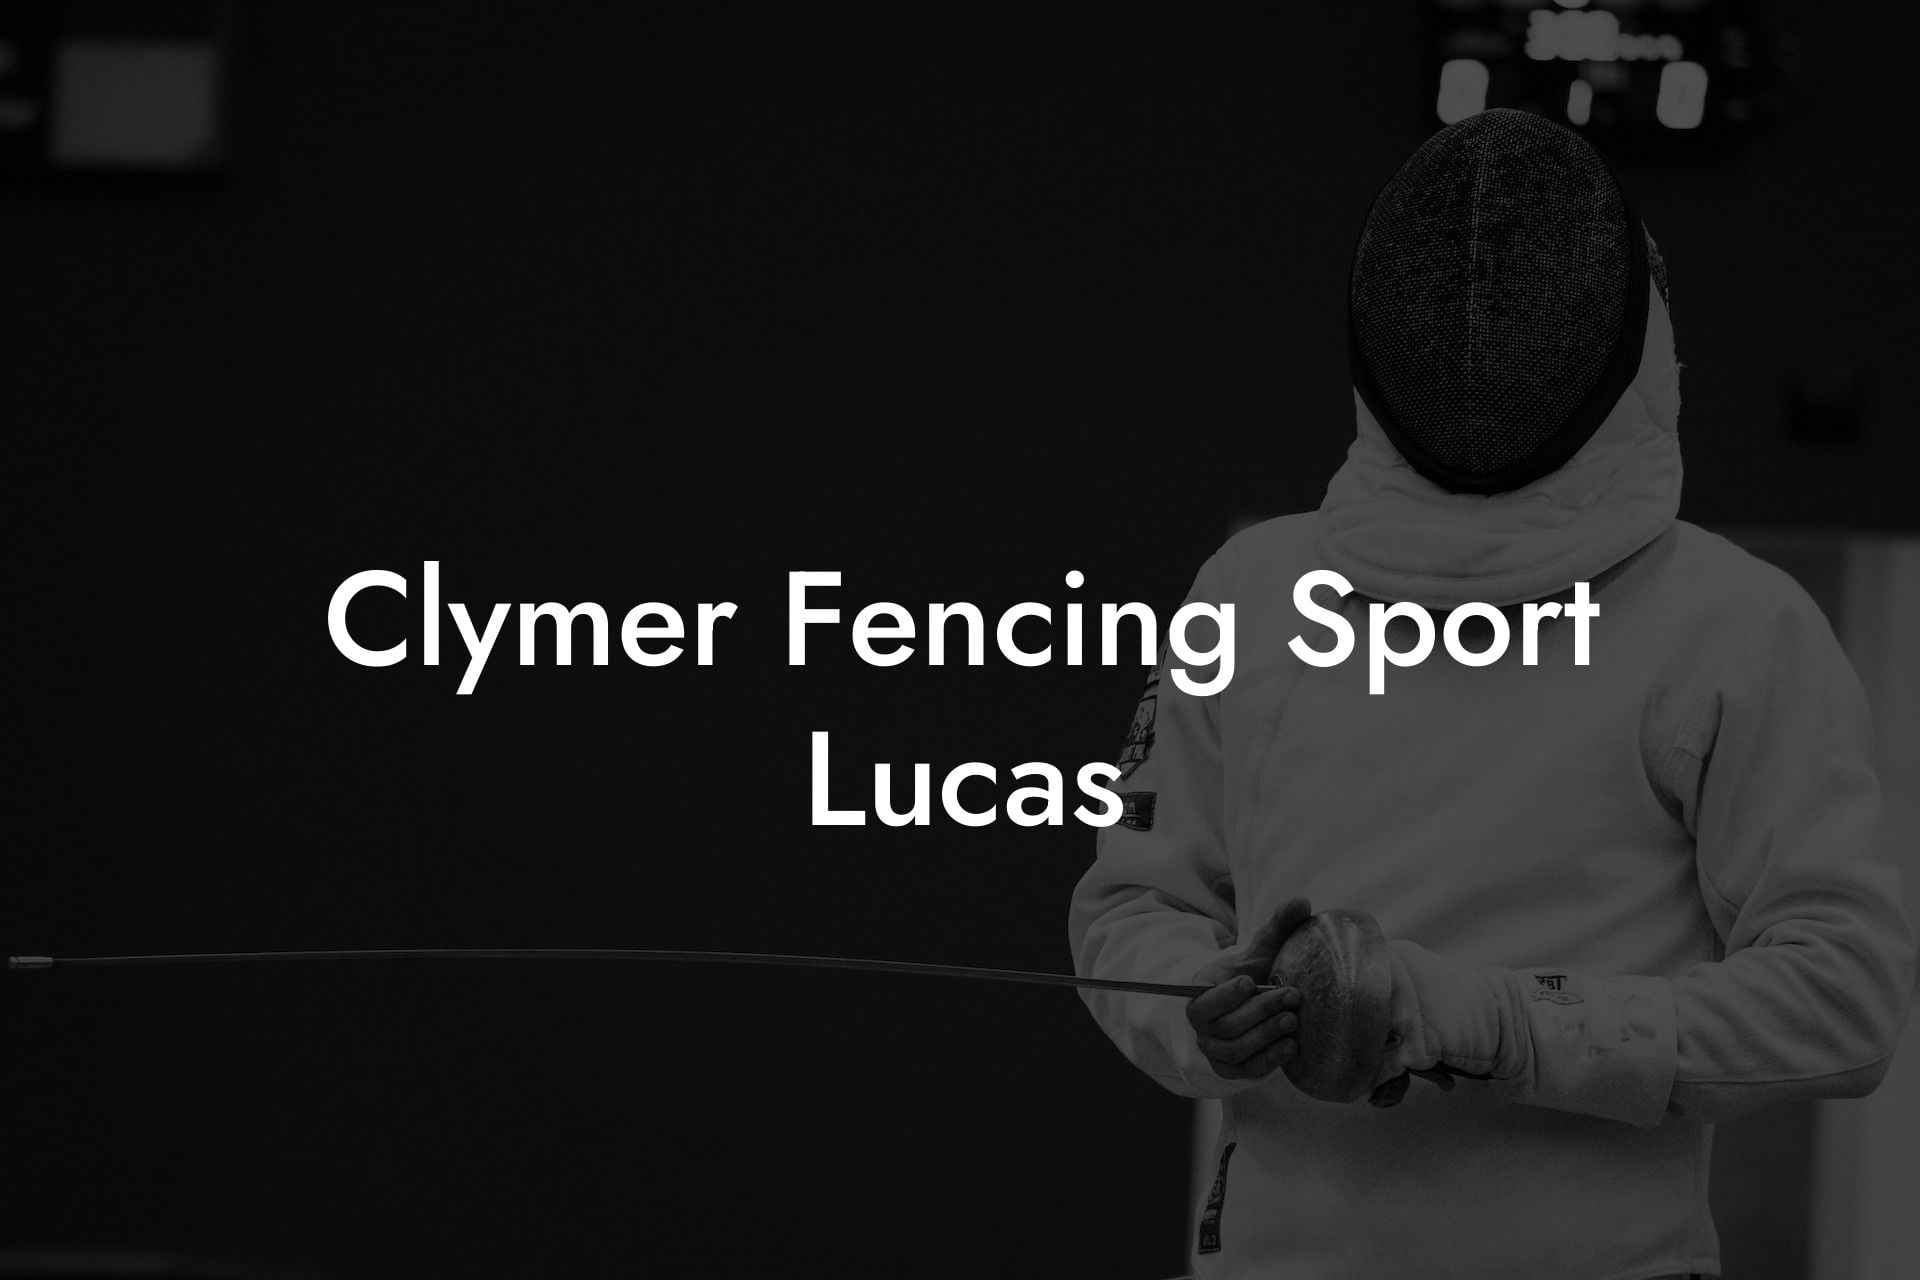 Clymer Fencing Sport Lucas